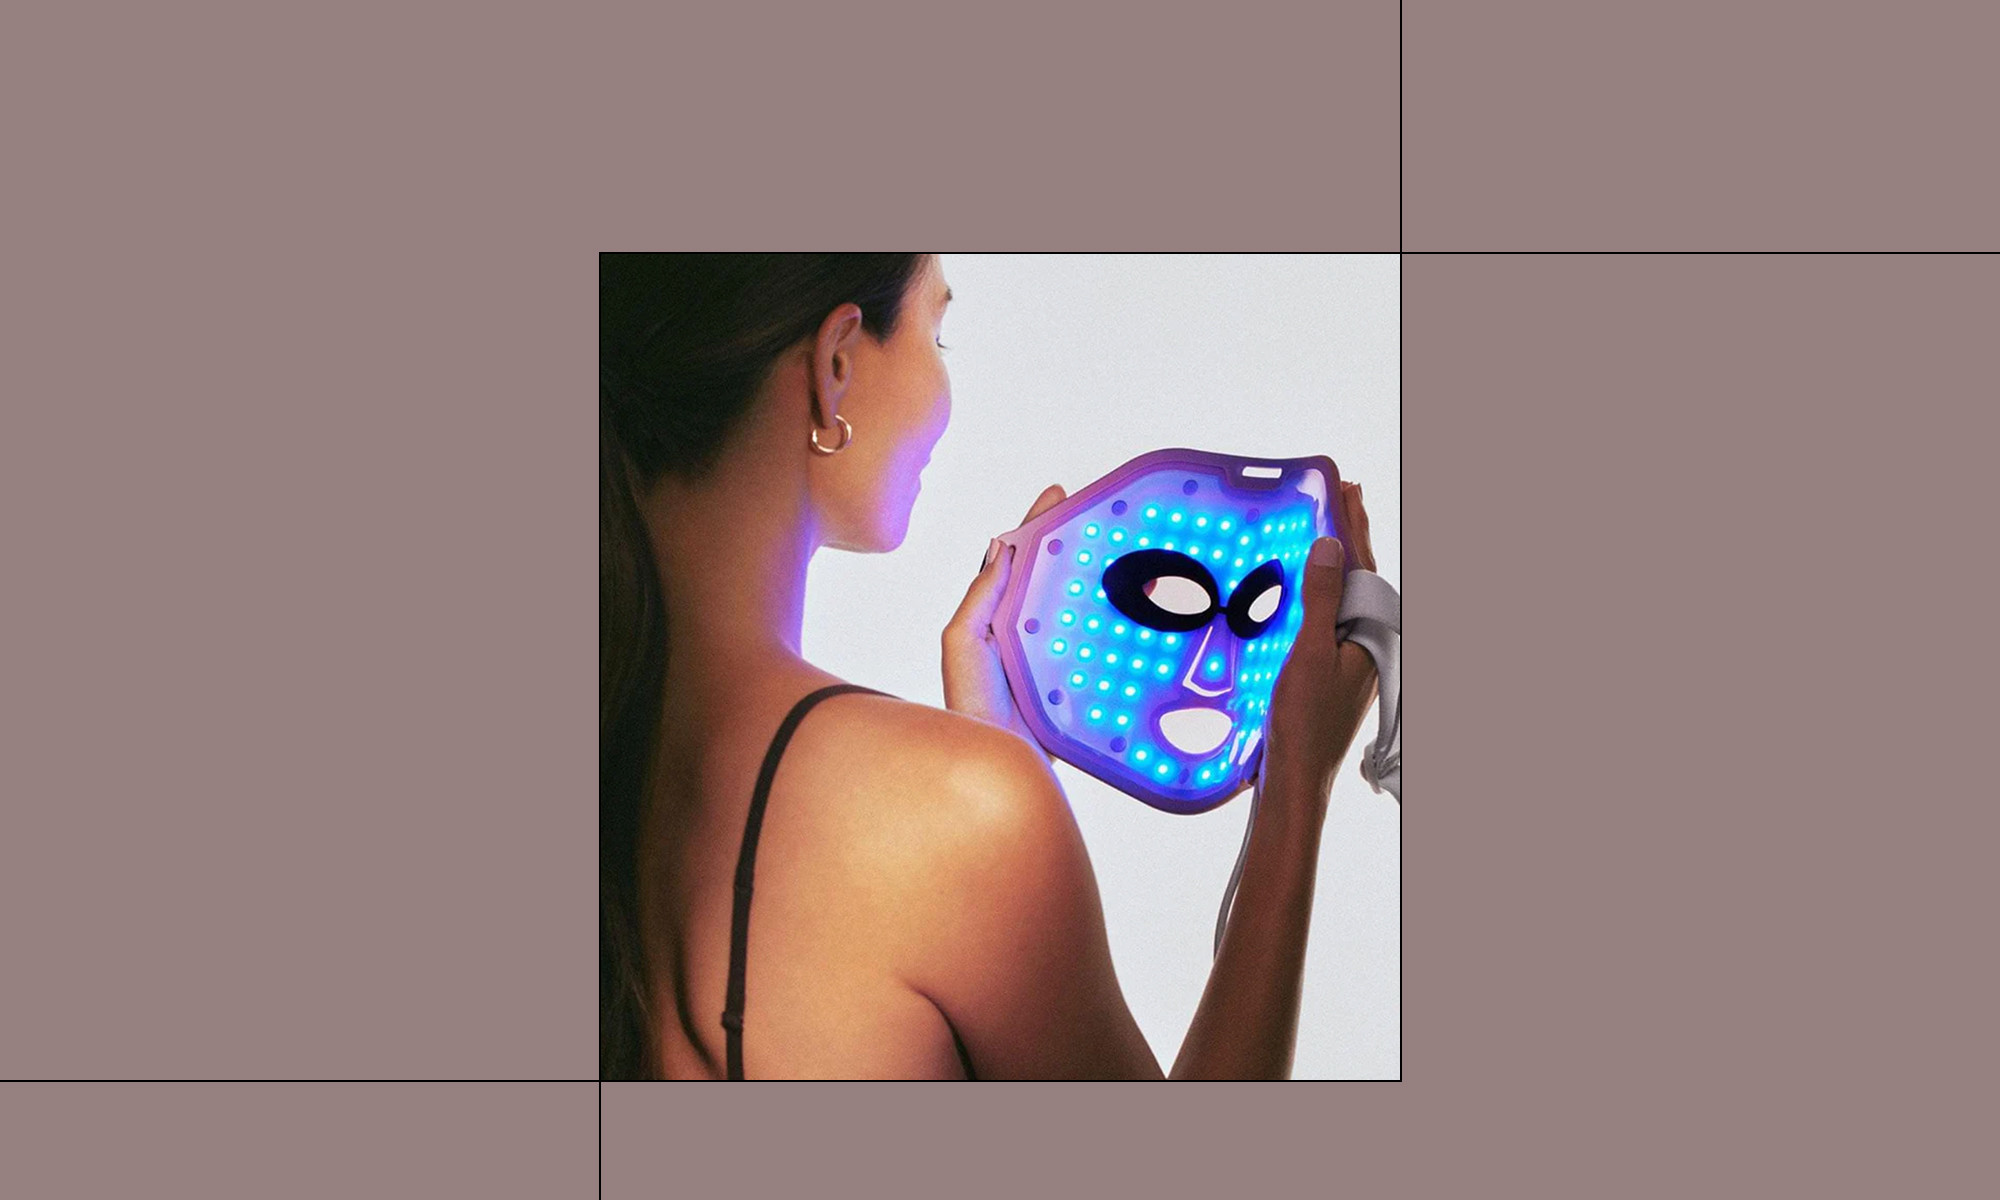 Solawave LED Face Mask Save 40% On This Prime Day Deal mindbodygreen